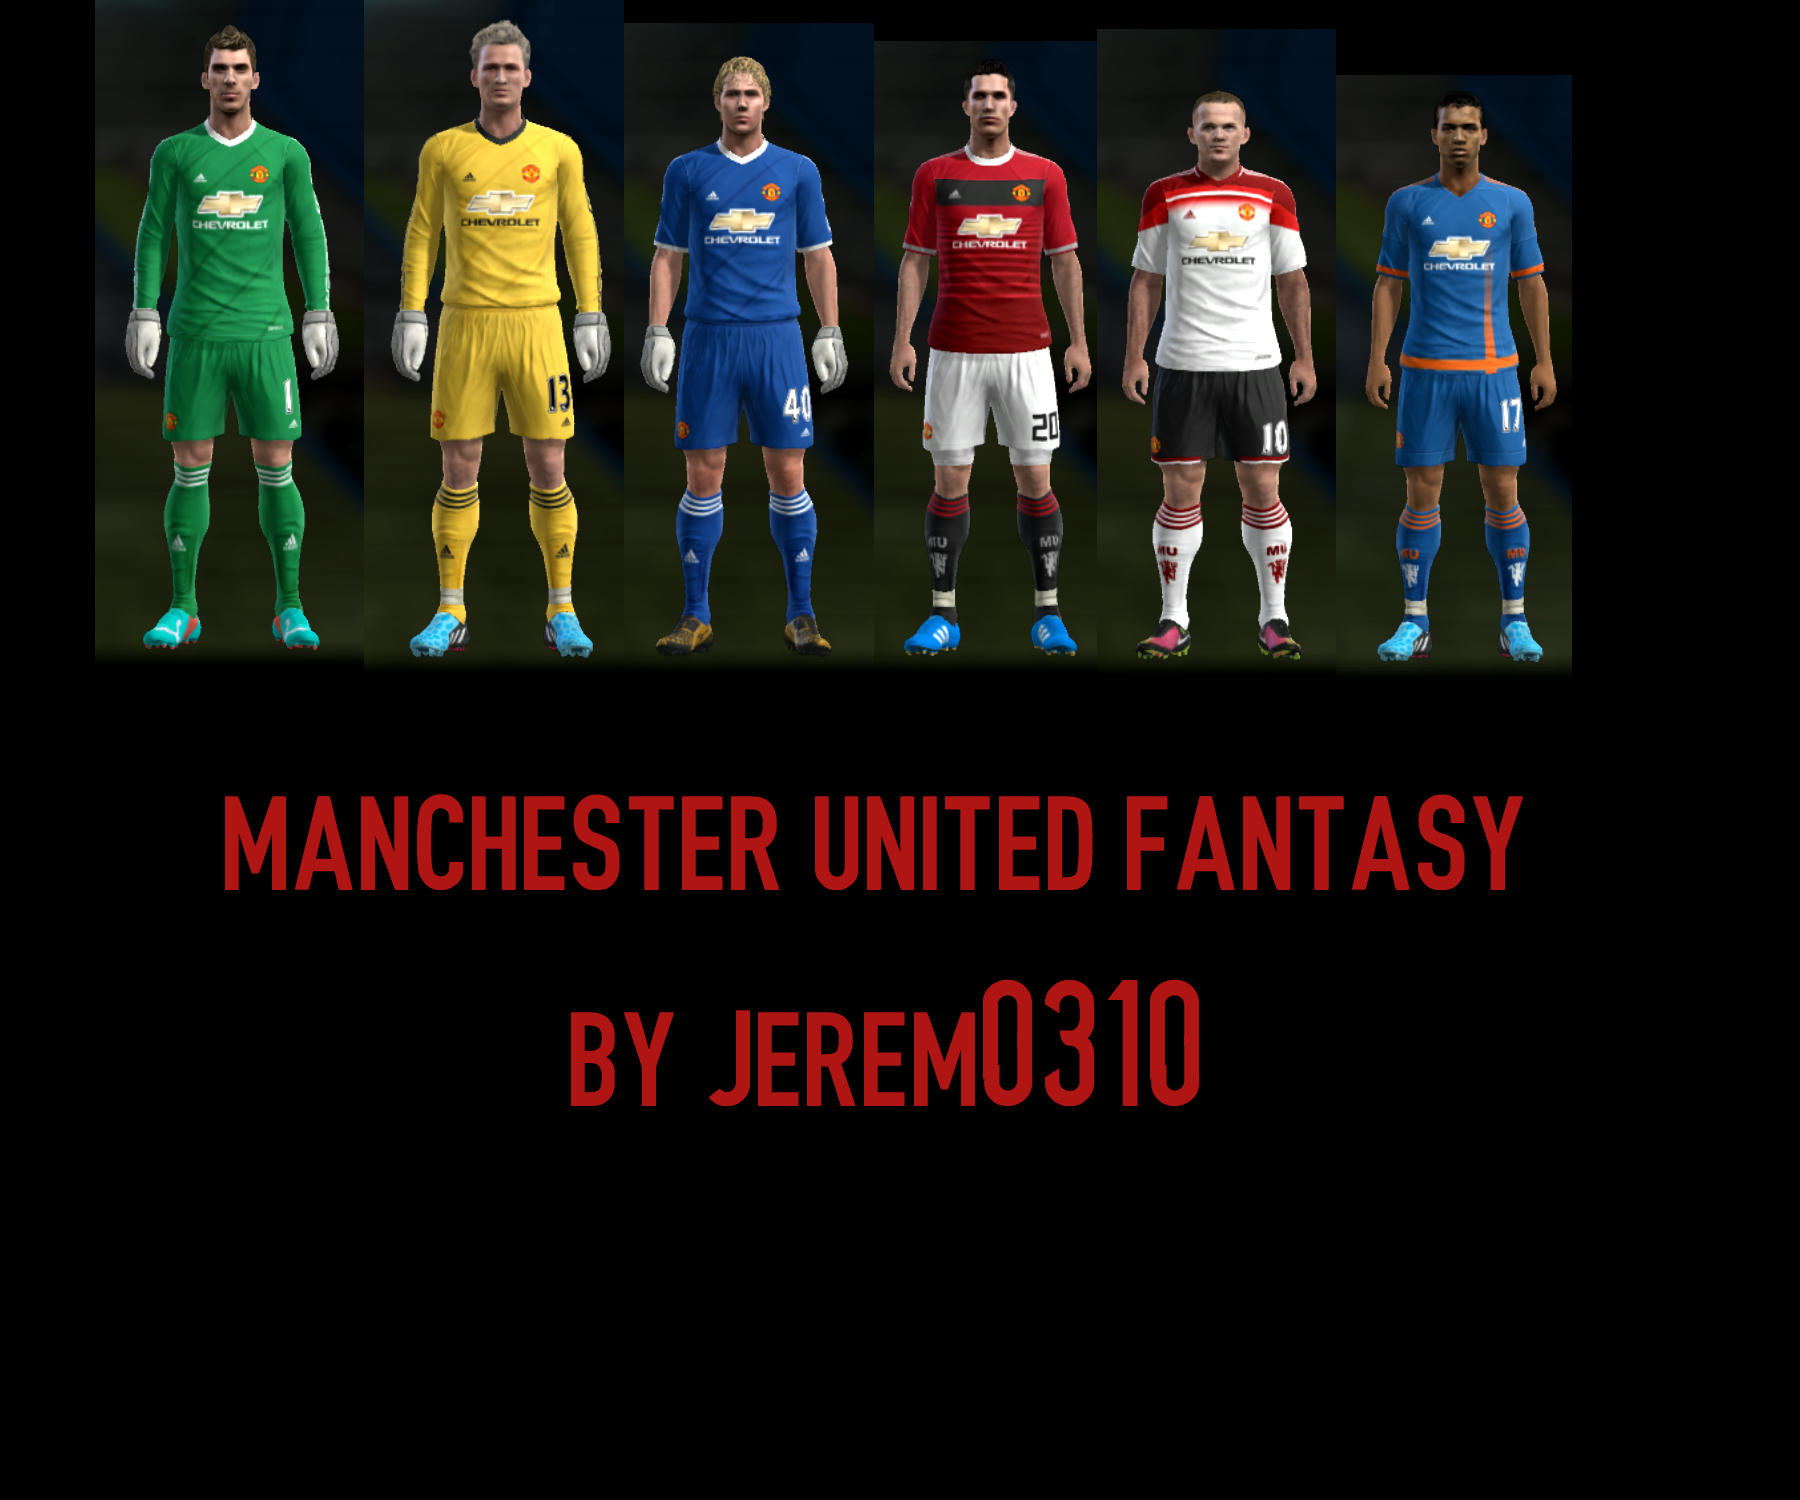 PES 2013 Manchester United Fantasy Kits by JEREM0310